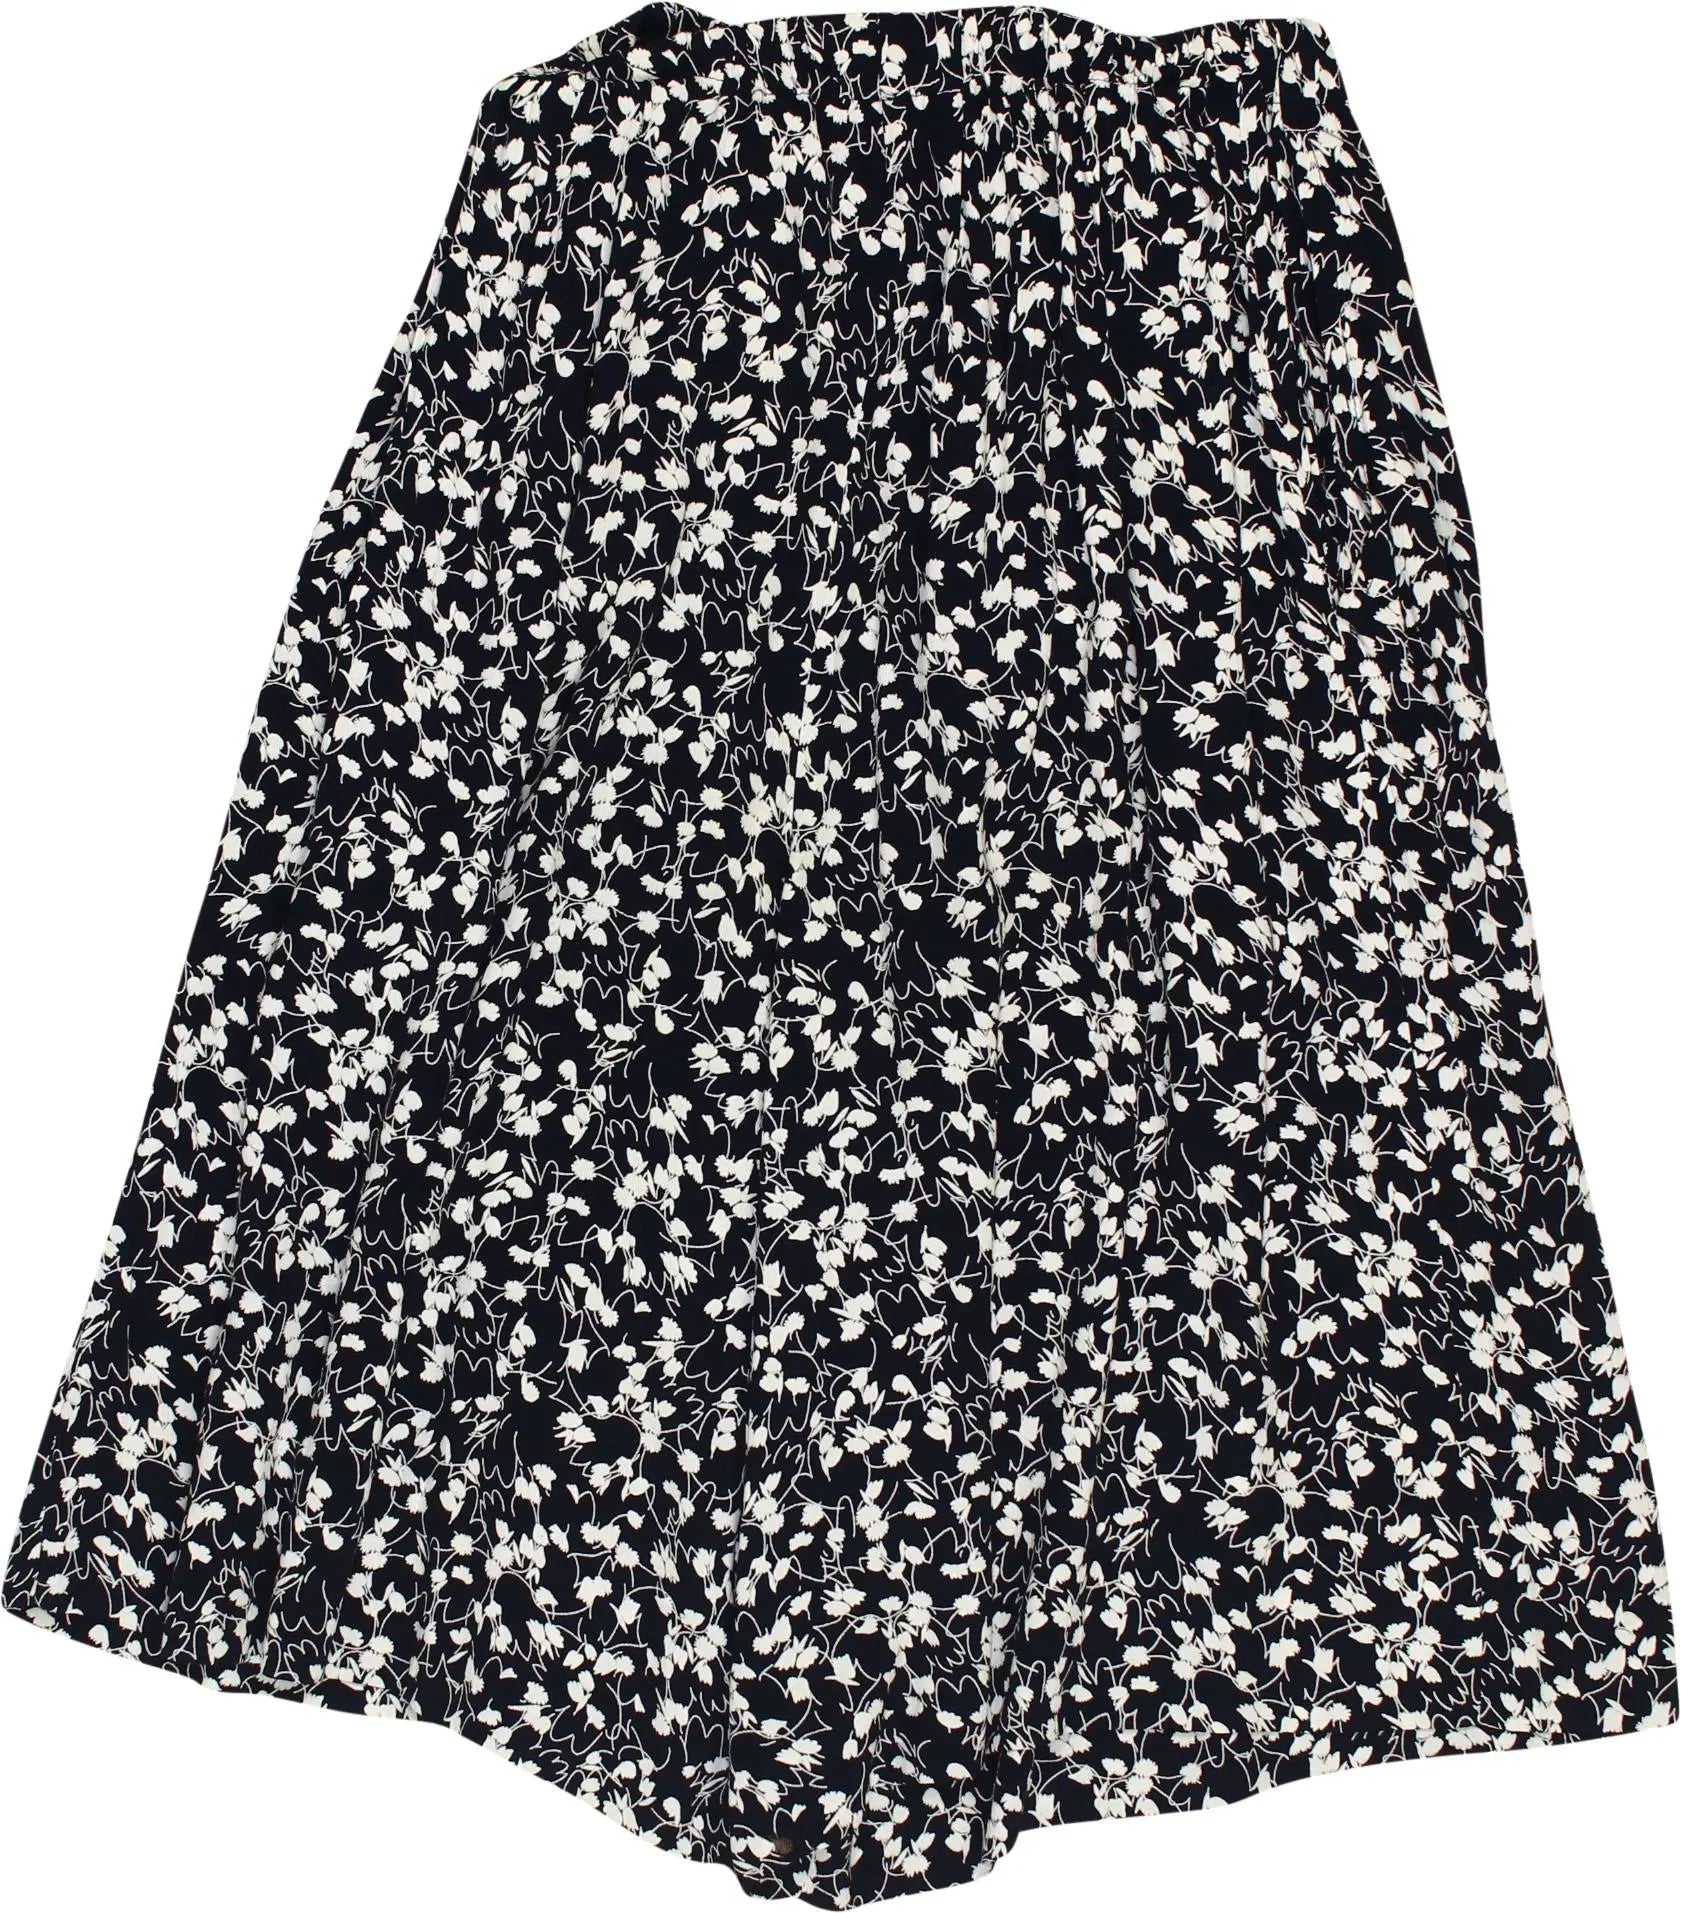 Afibel - Knee Length Shorts- ThriftTale.com - Vintage and second handclothing